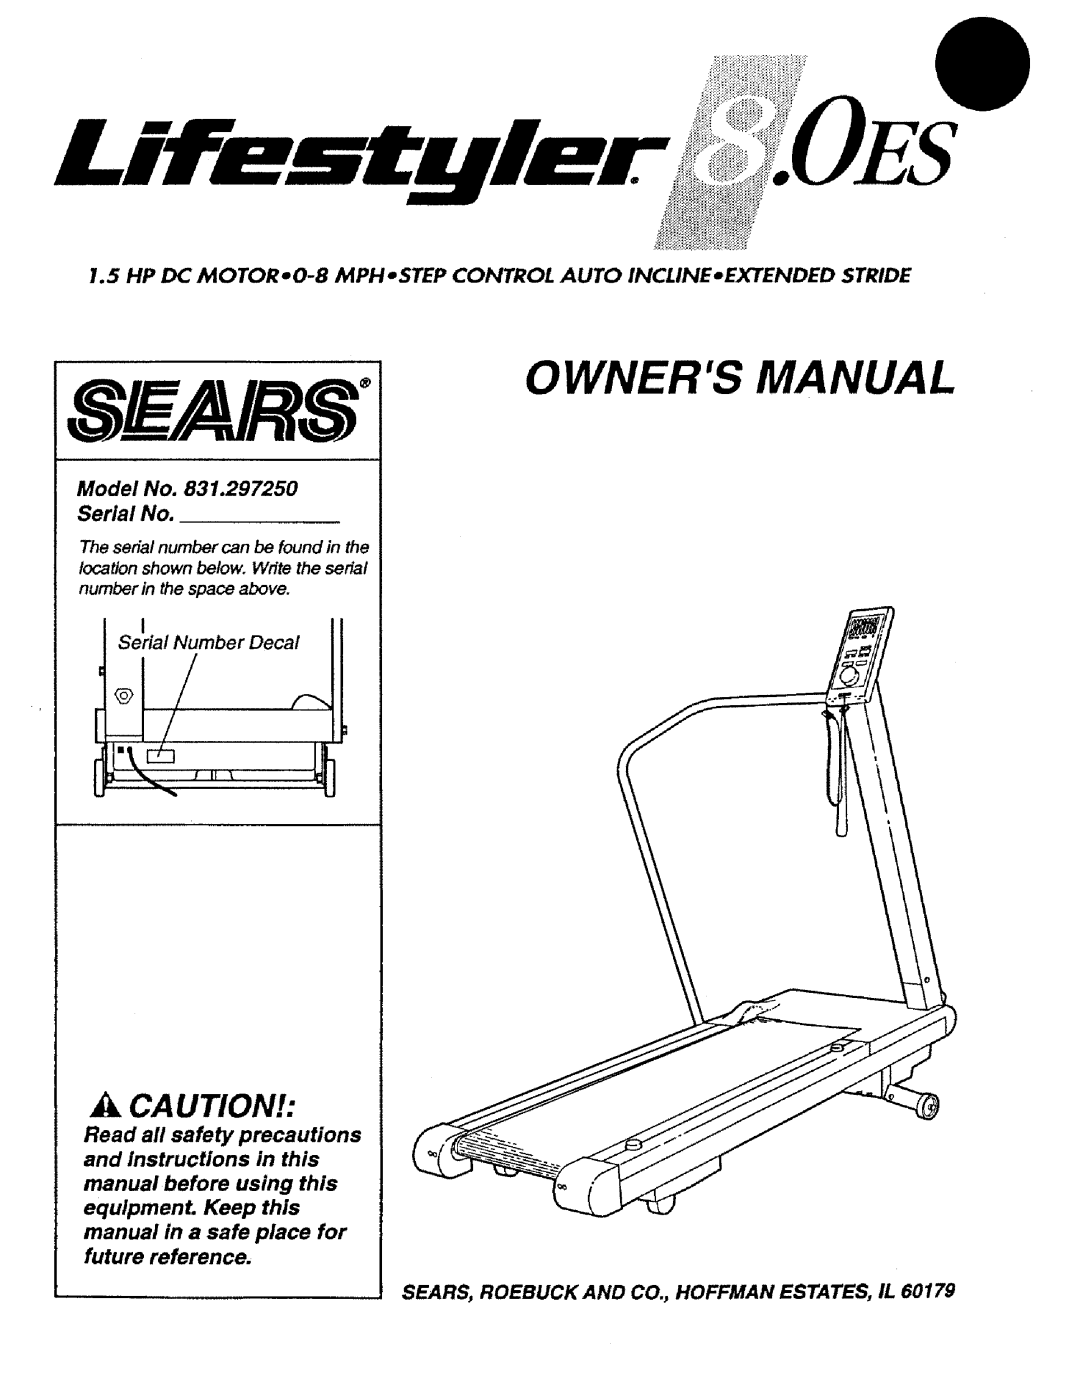 Sears 831.29725 owner manual Owners Manual, Model No Serial No, Serial Number Decal, @ . F 